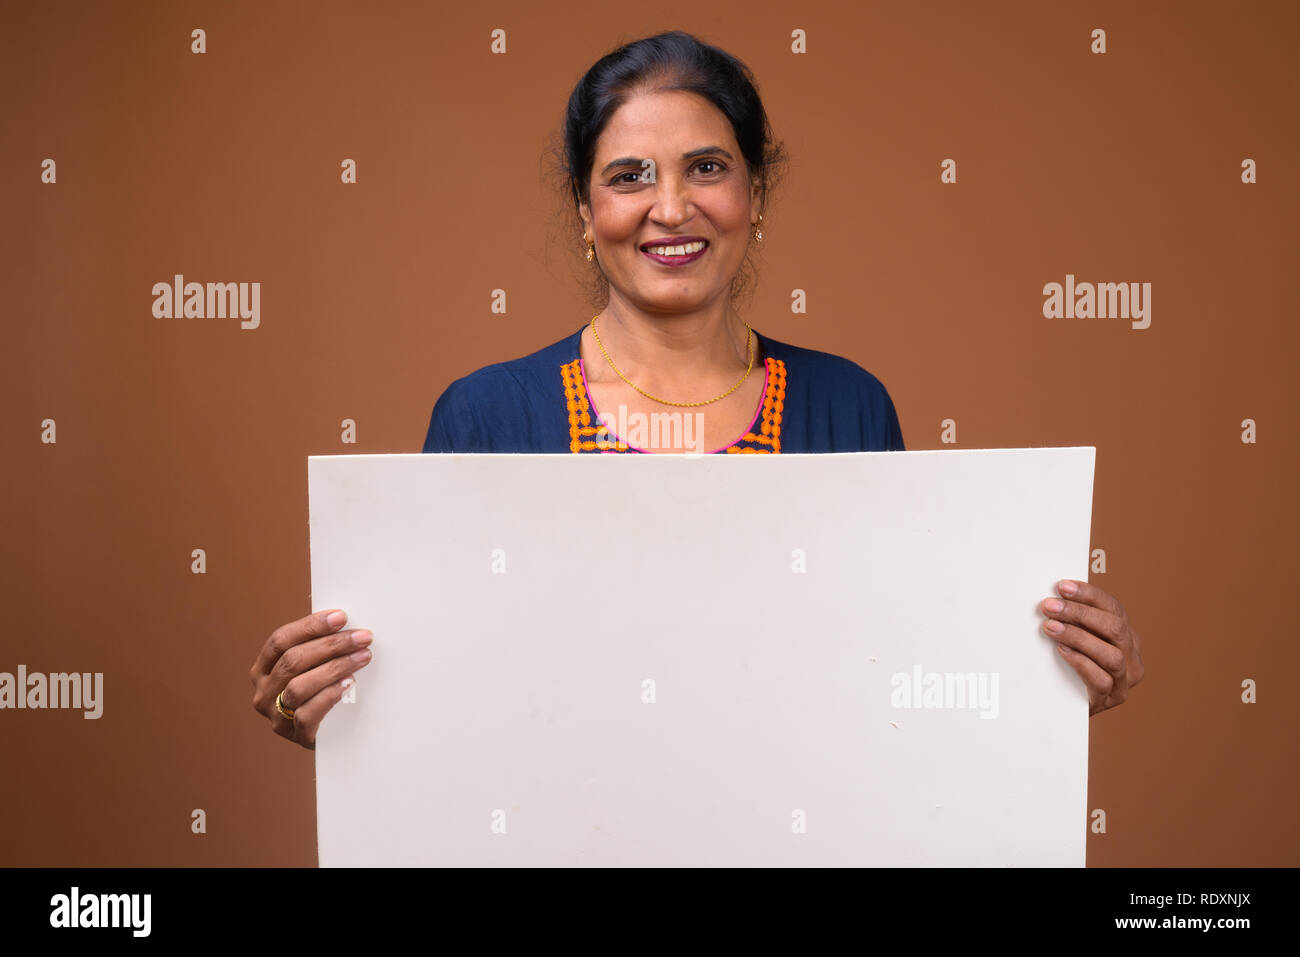 Felice donna indiana holding vuoto lavagna bianca con copyspace Foto Stock